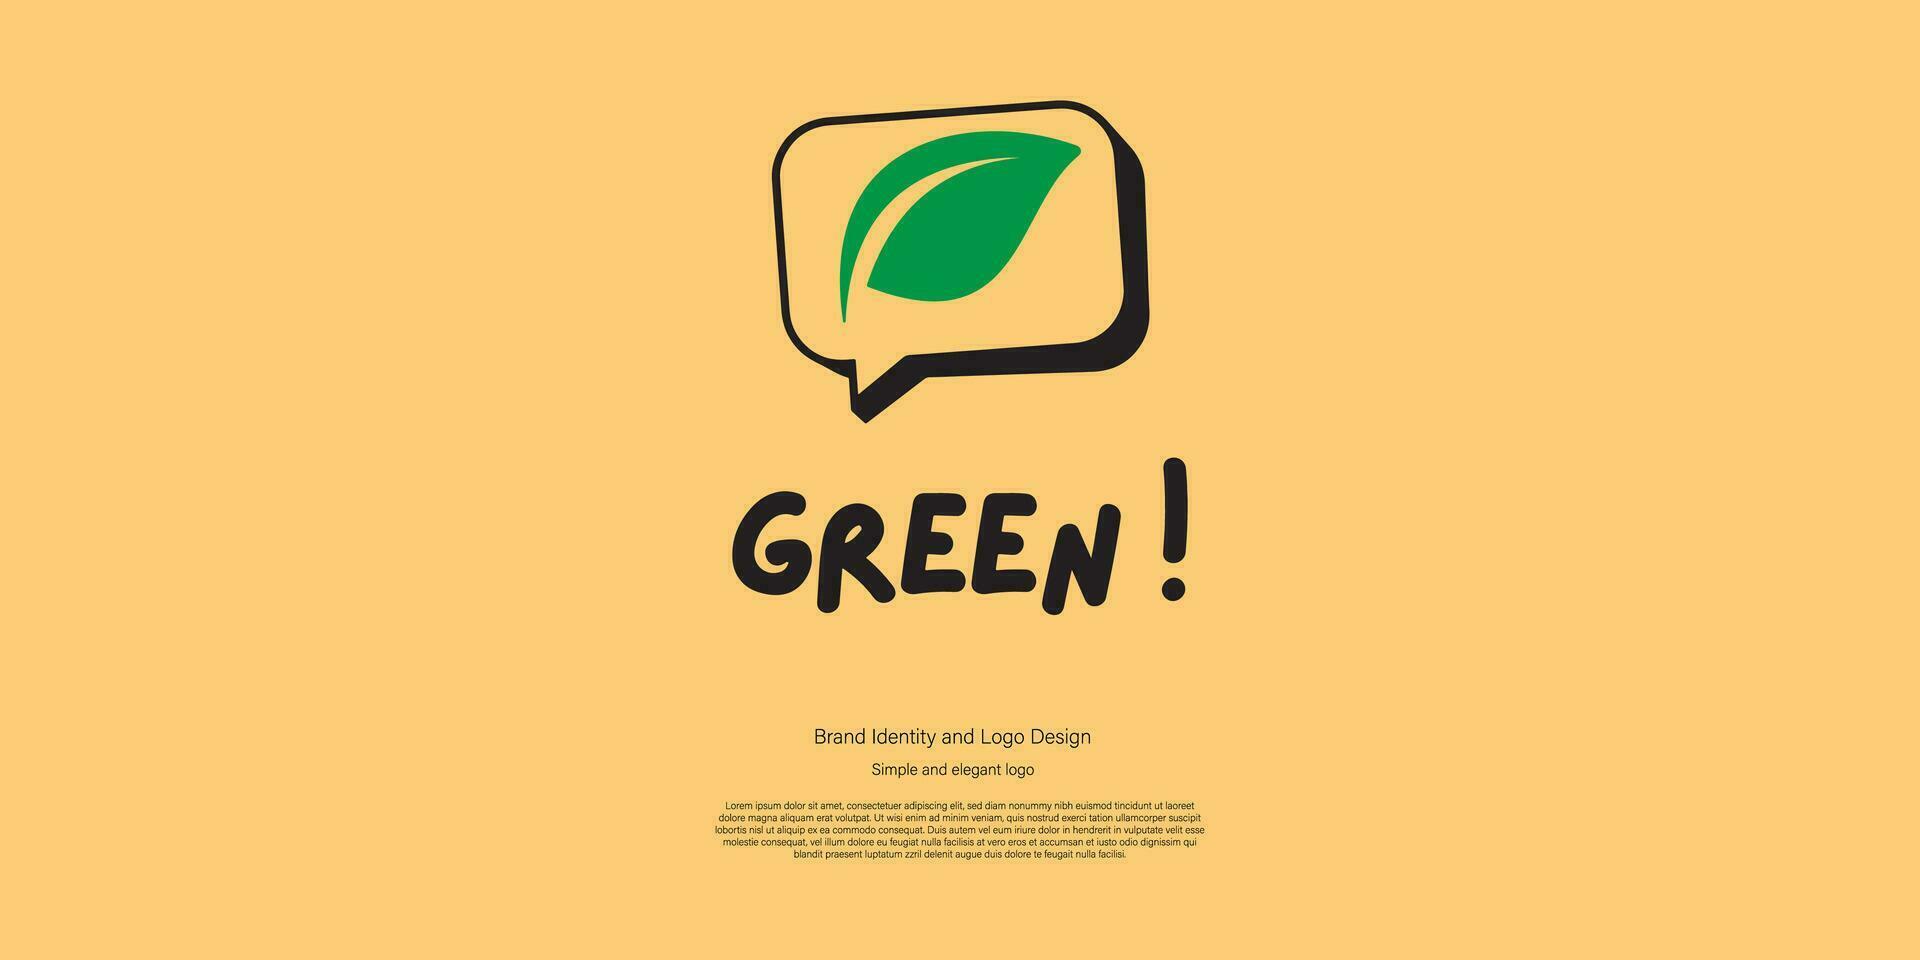 green message logo design for earth event or organization vector